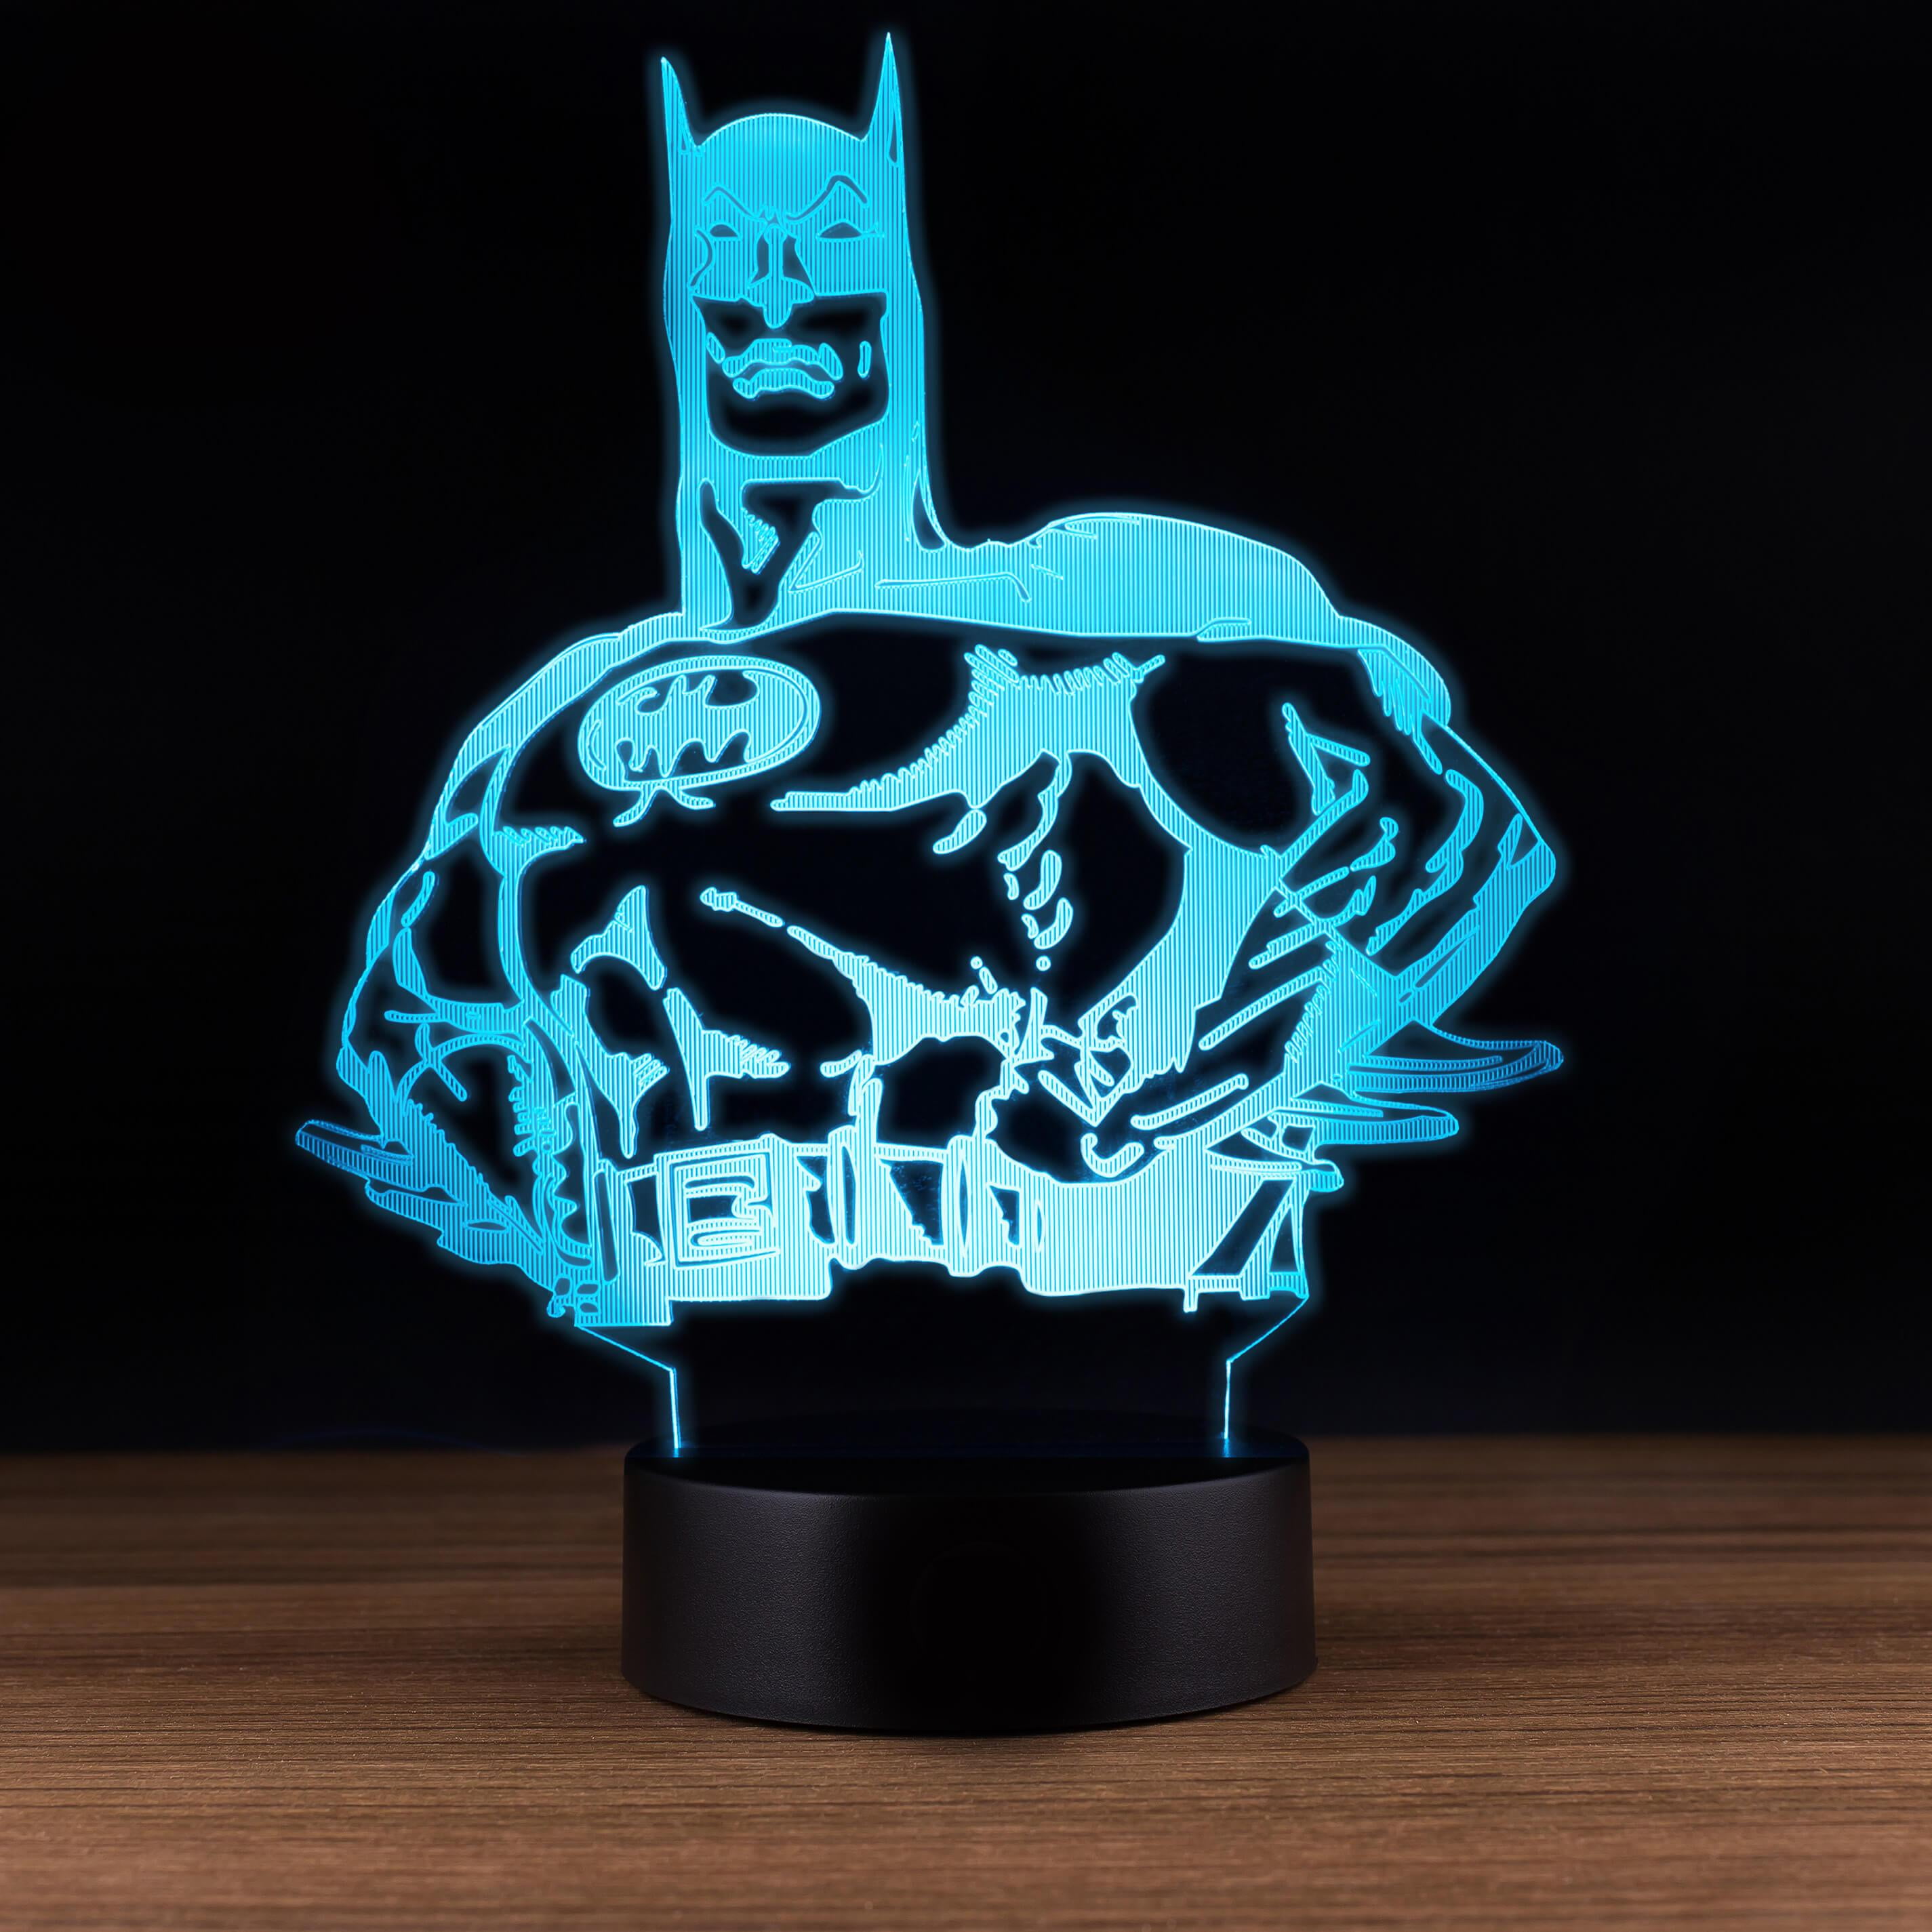 Super Hero Batman 3D LED Night light Touch Switch Table Desk Lamp Gift 7 Color 